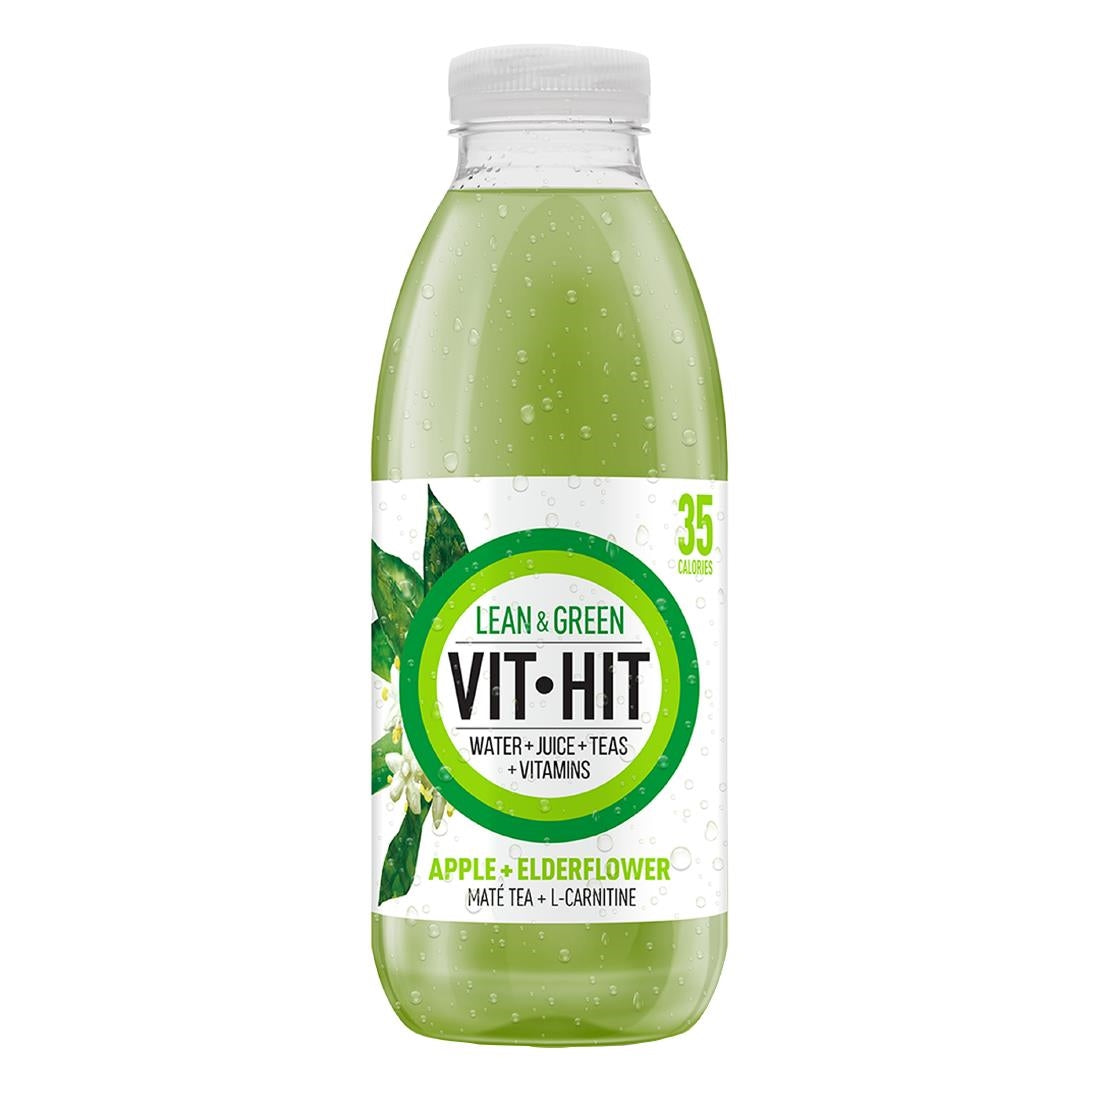 HS822 VITHIT Lean & Green Apple & Elderflower Vitamin Water 500ml (Pack of 12)